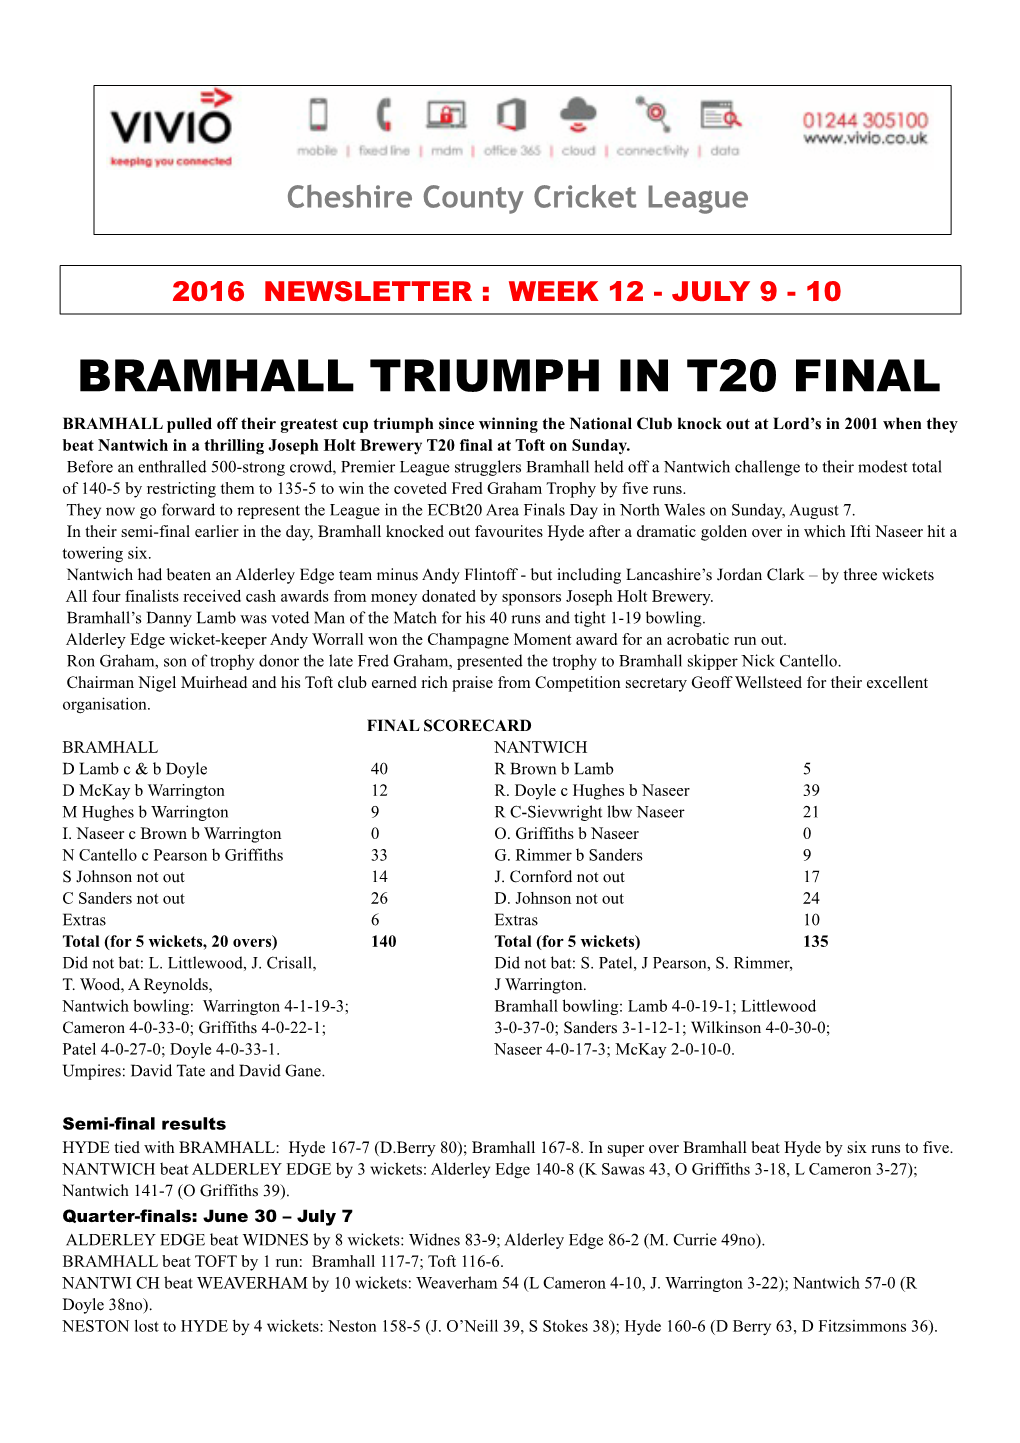 Bramhall Triumph in T20 Final